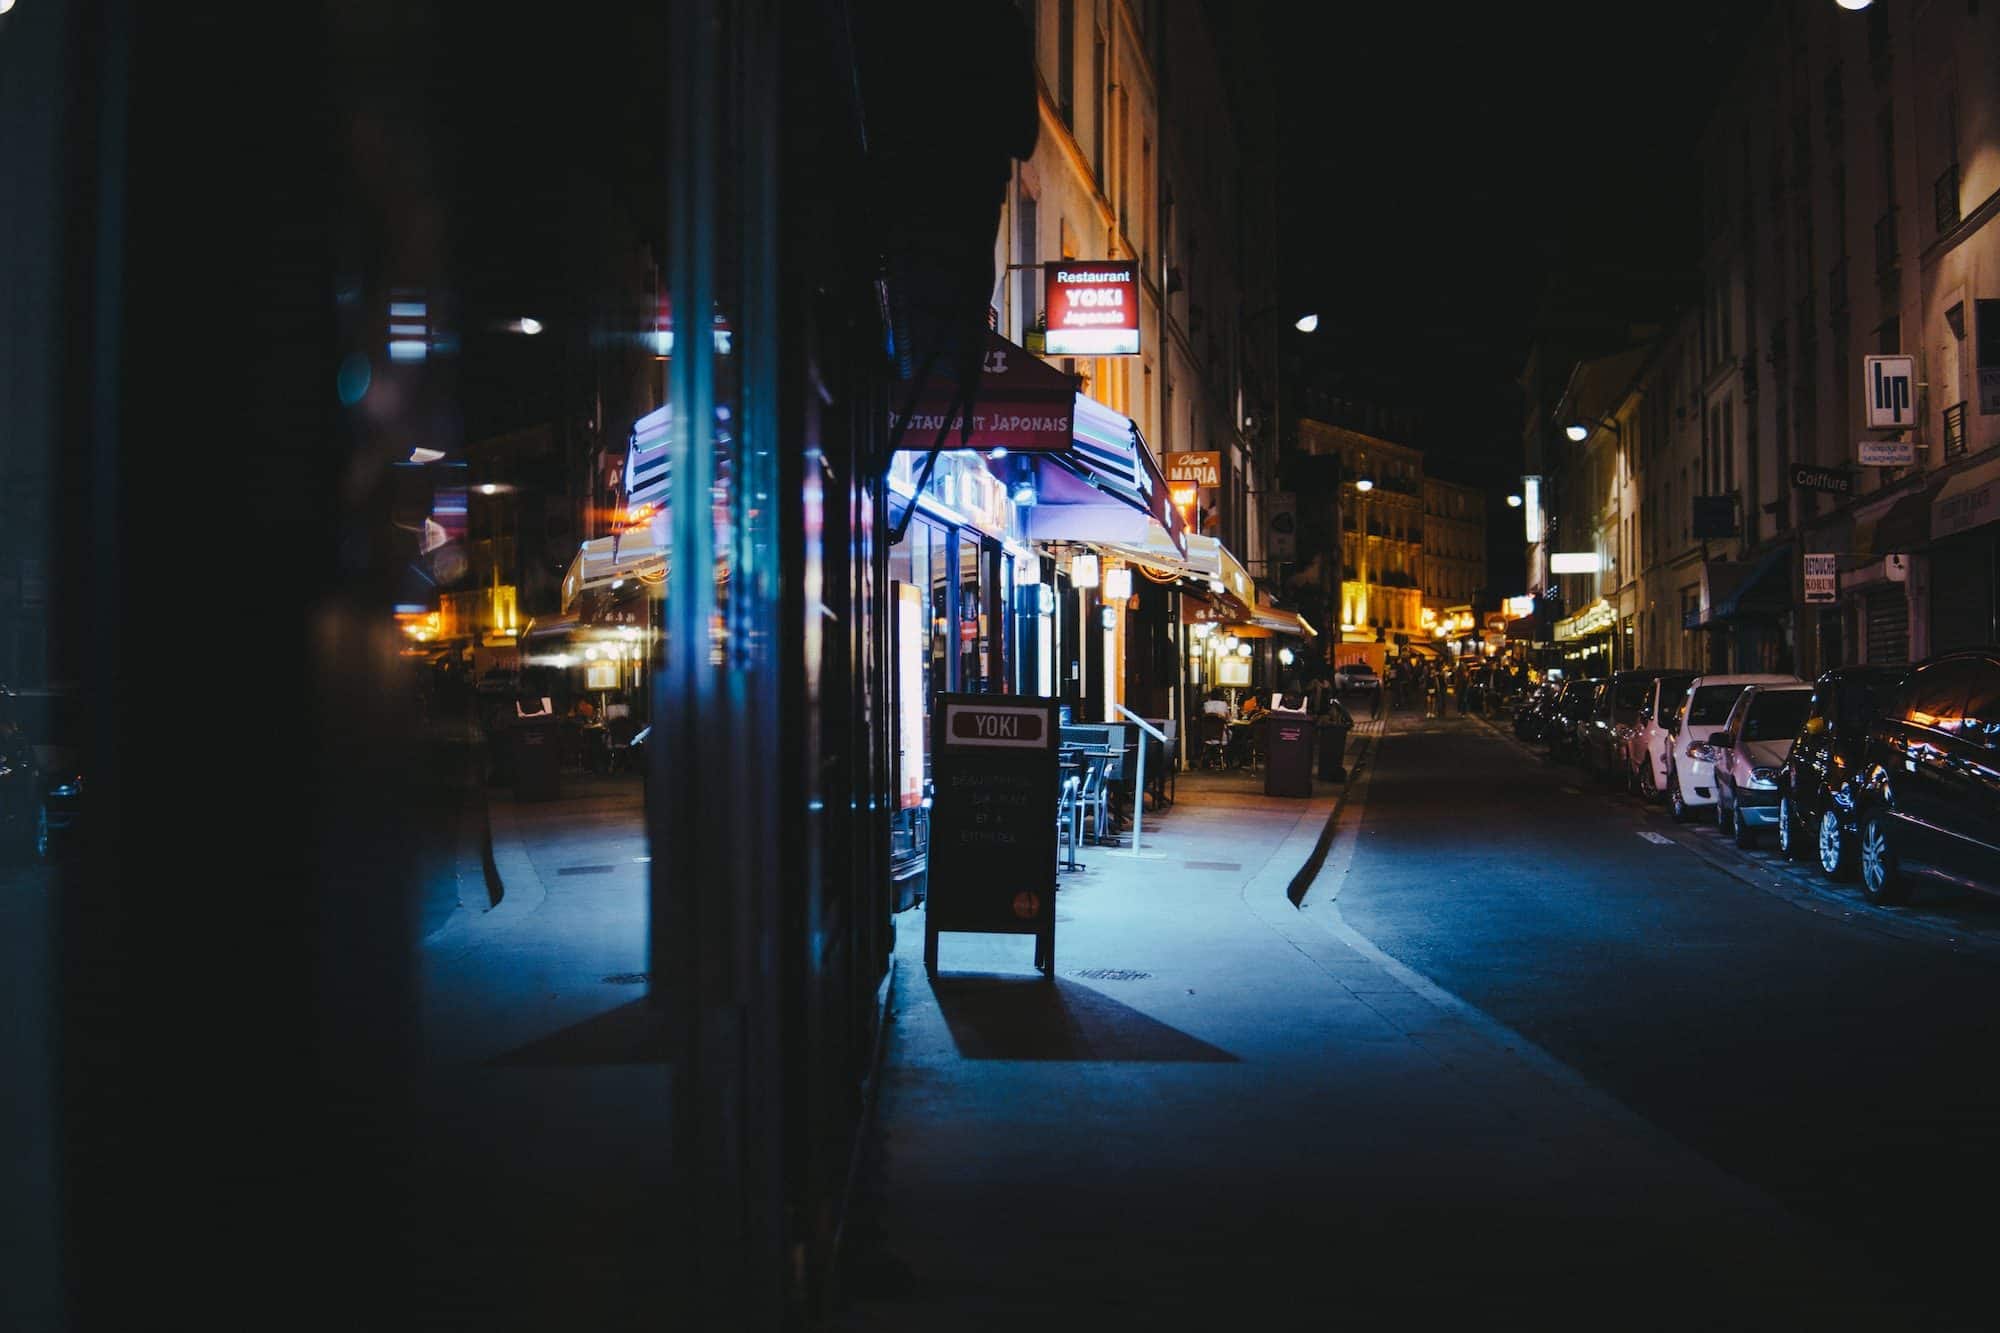 A night street scene in Paris of neon shop signs lining on empty street.